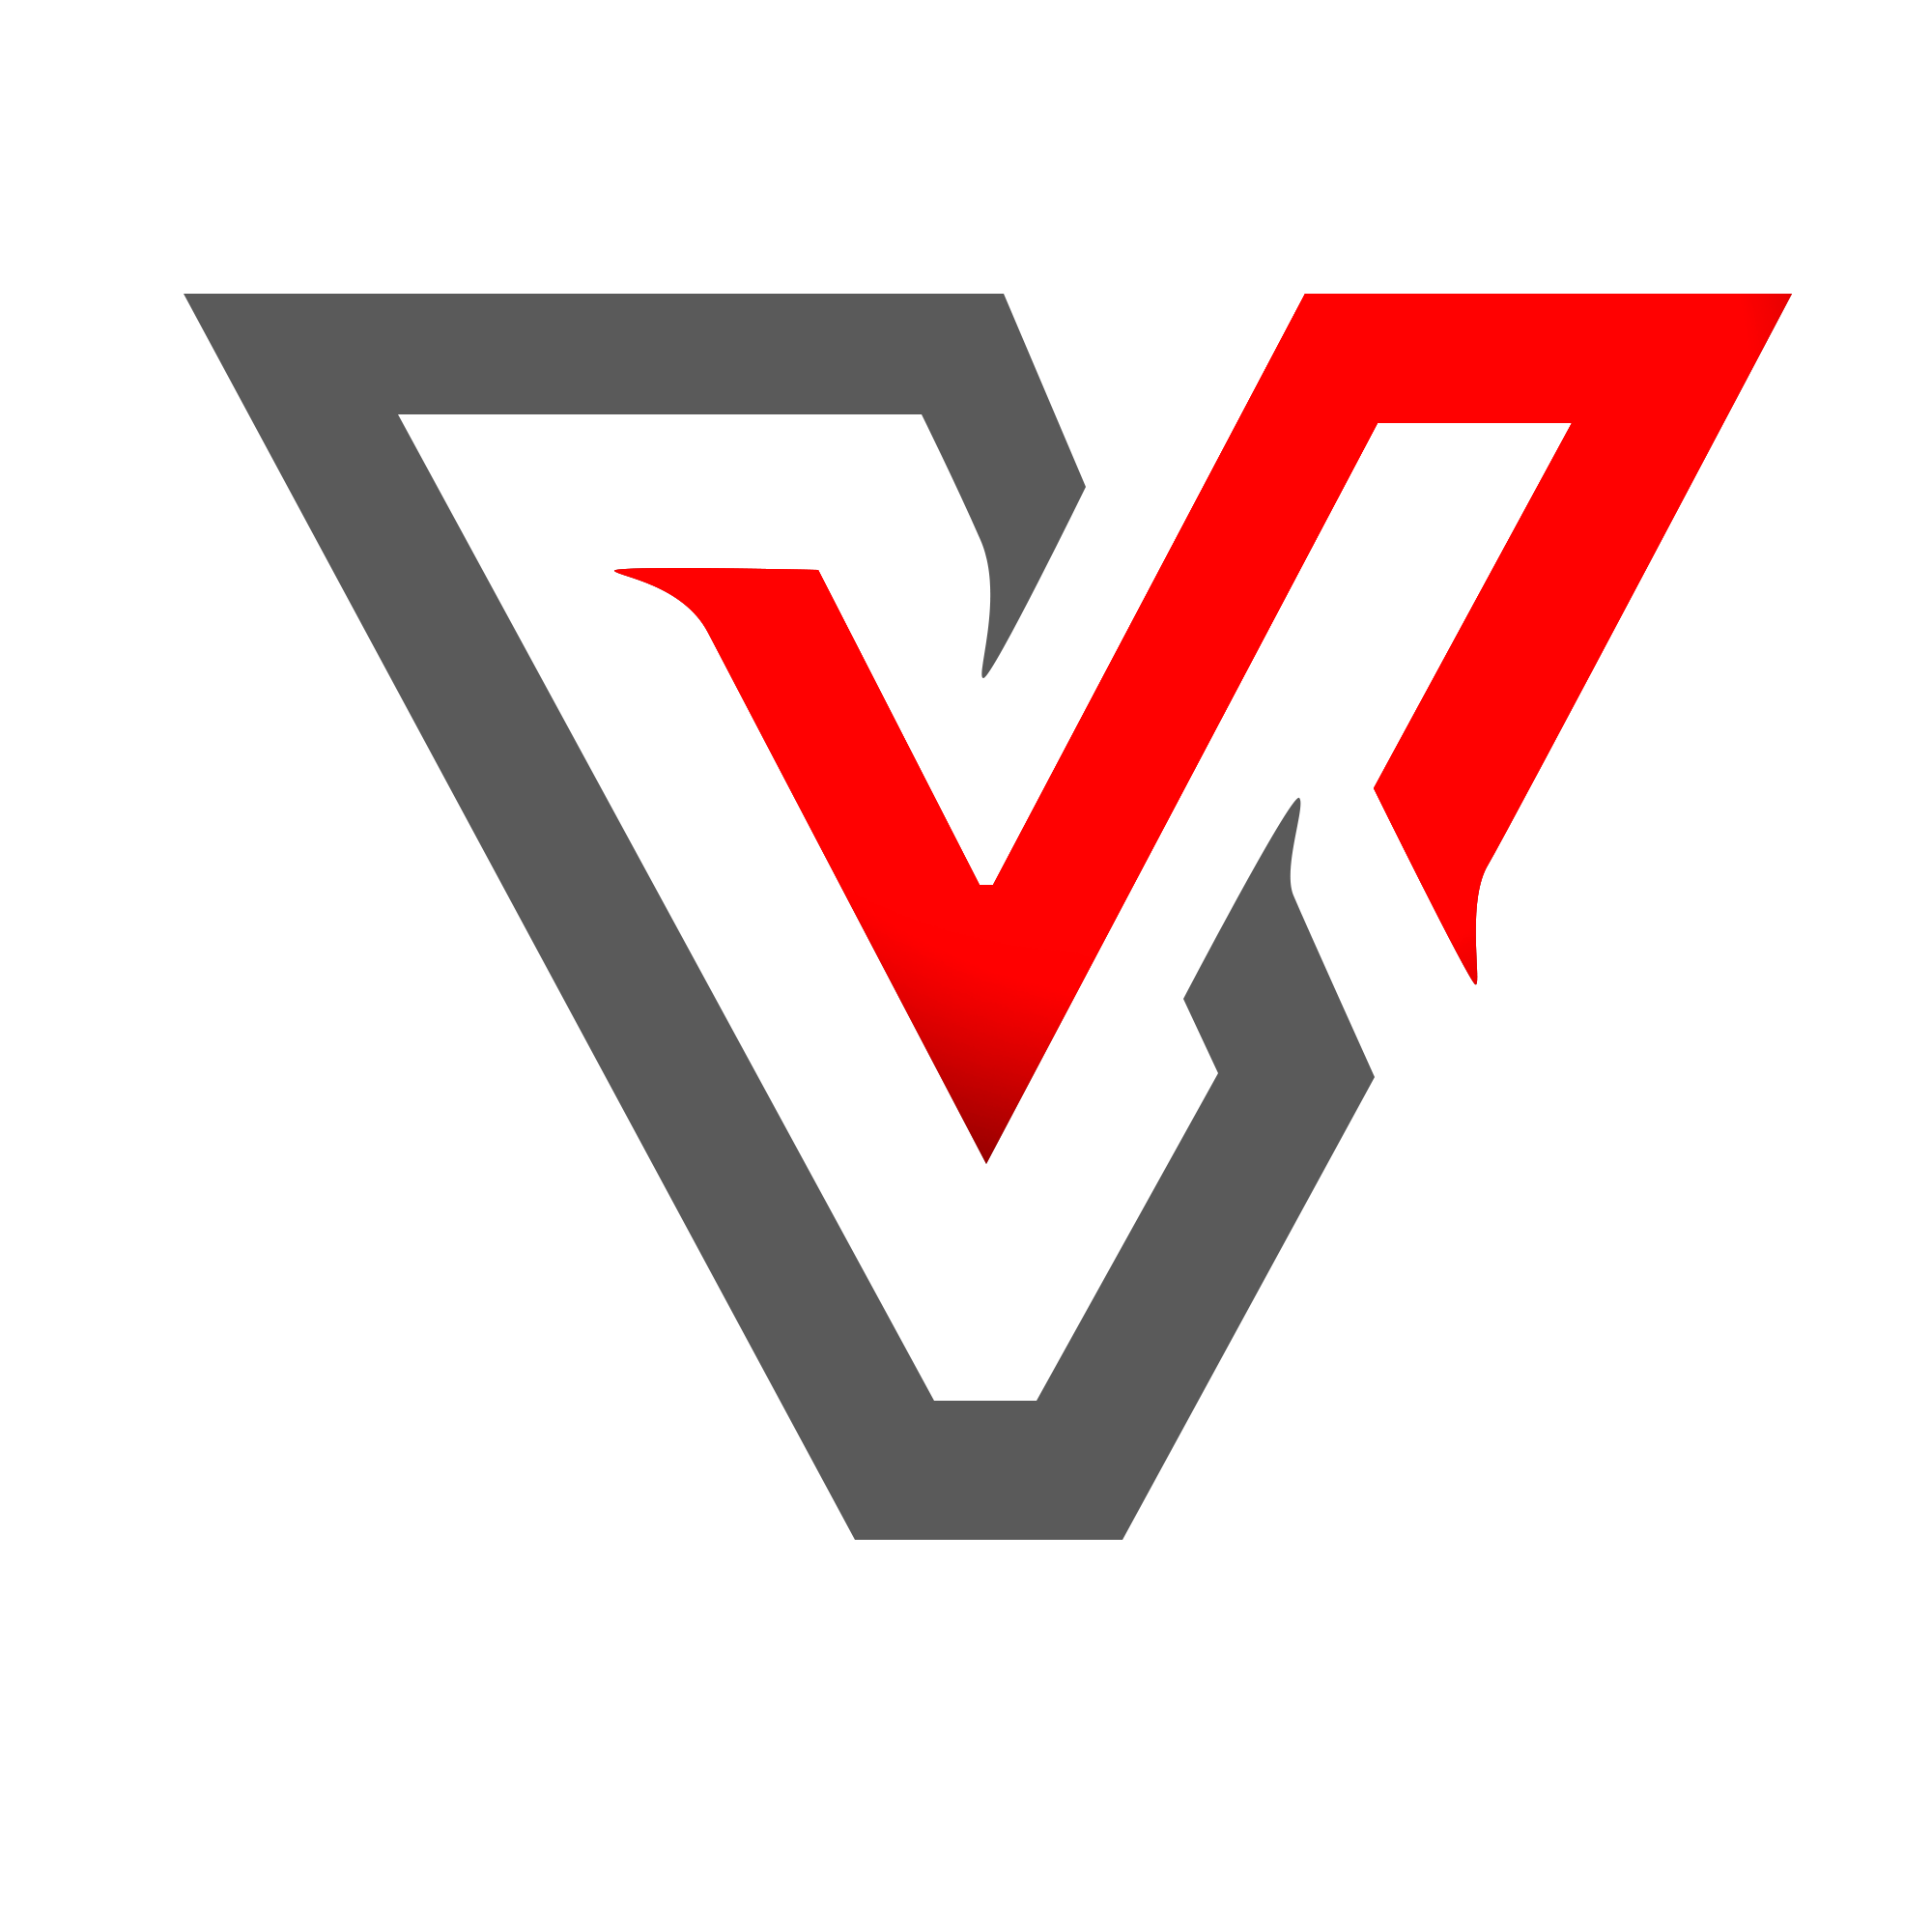 Логотип v. Буква v. Эмблема с буквой v. Буква а логотип.